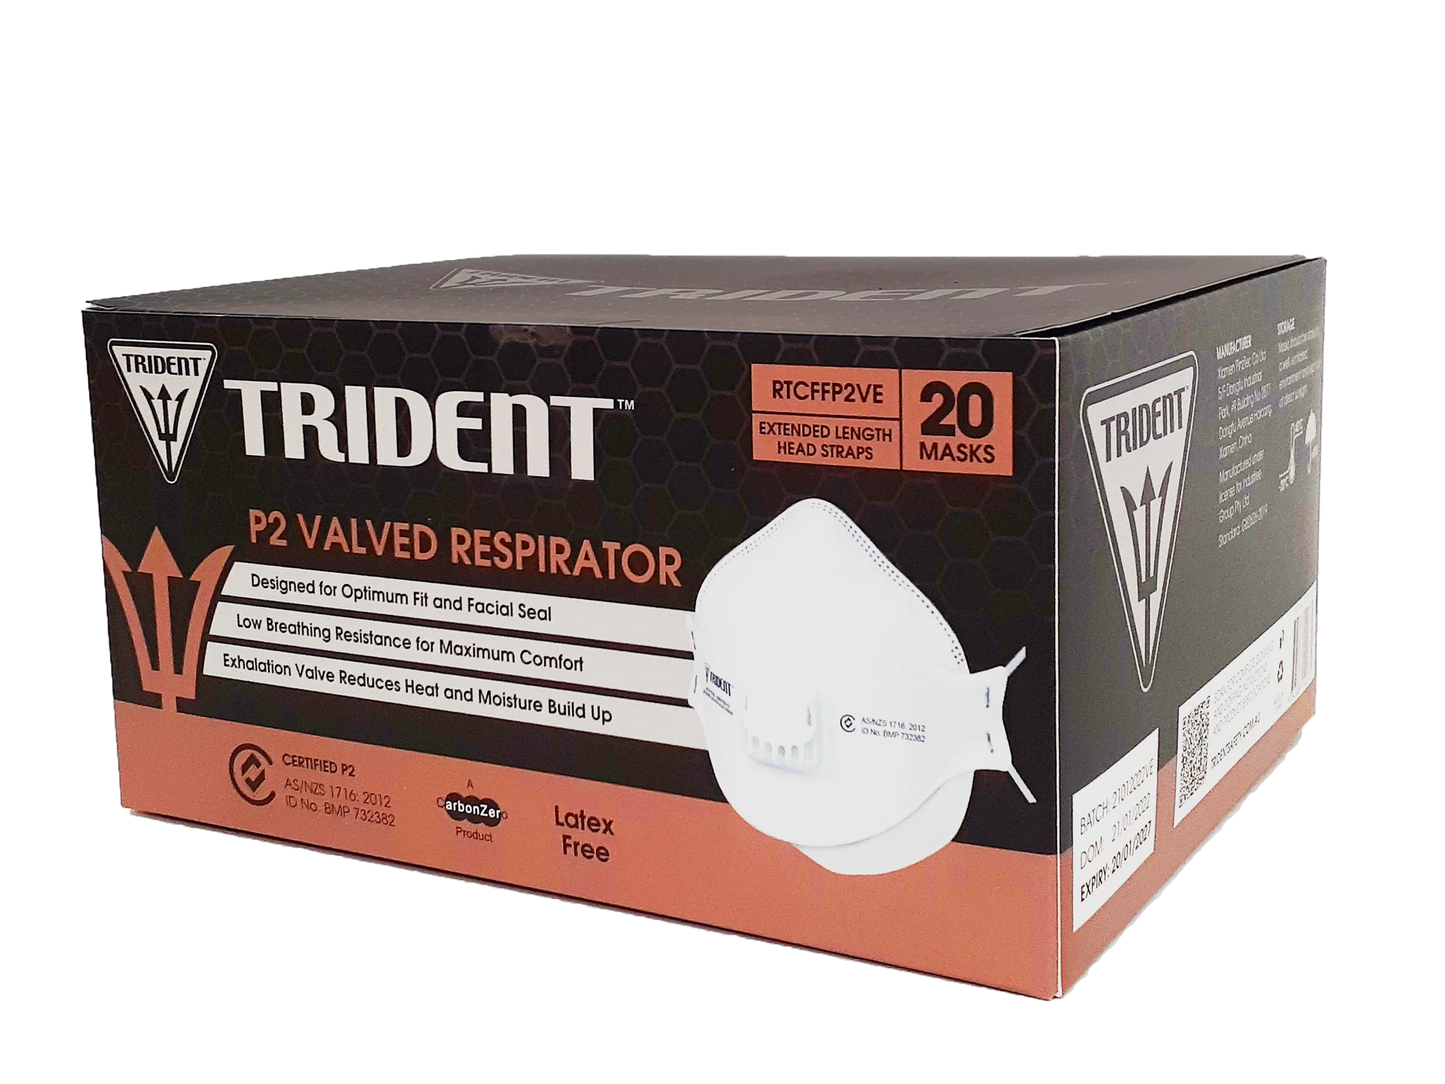 Trident P2 Valved Respirator Industrial Grade Extended Length Head Straps Level 3 (1Box/20masks)